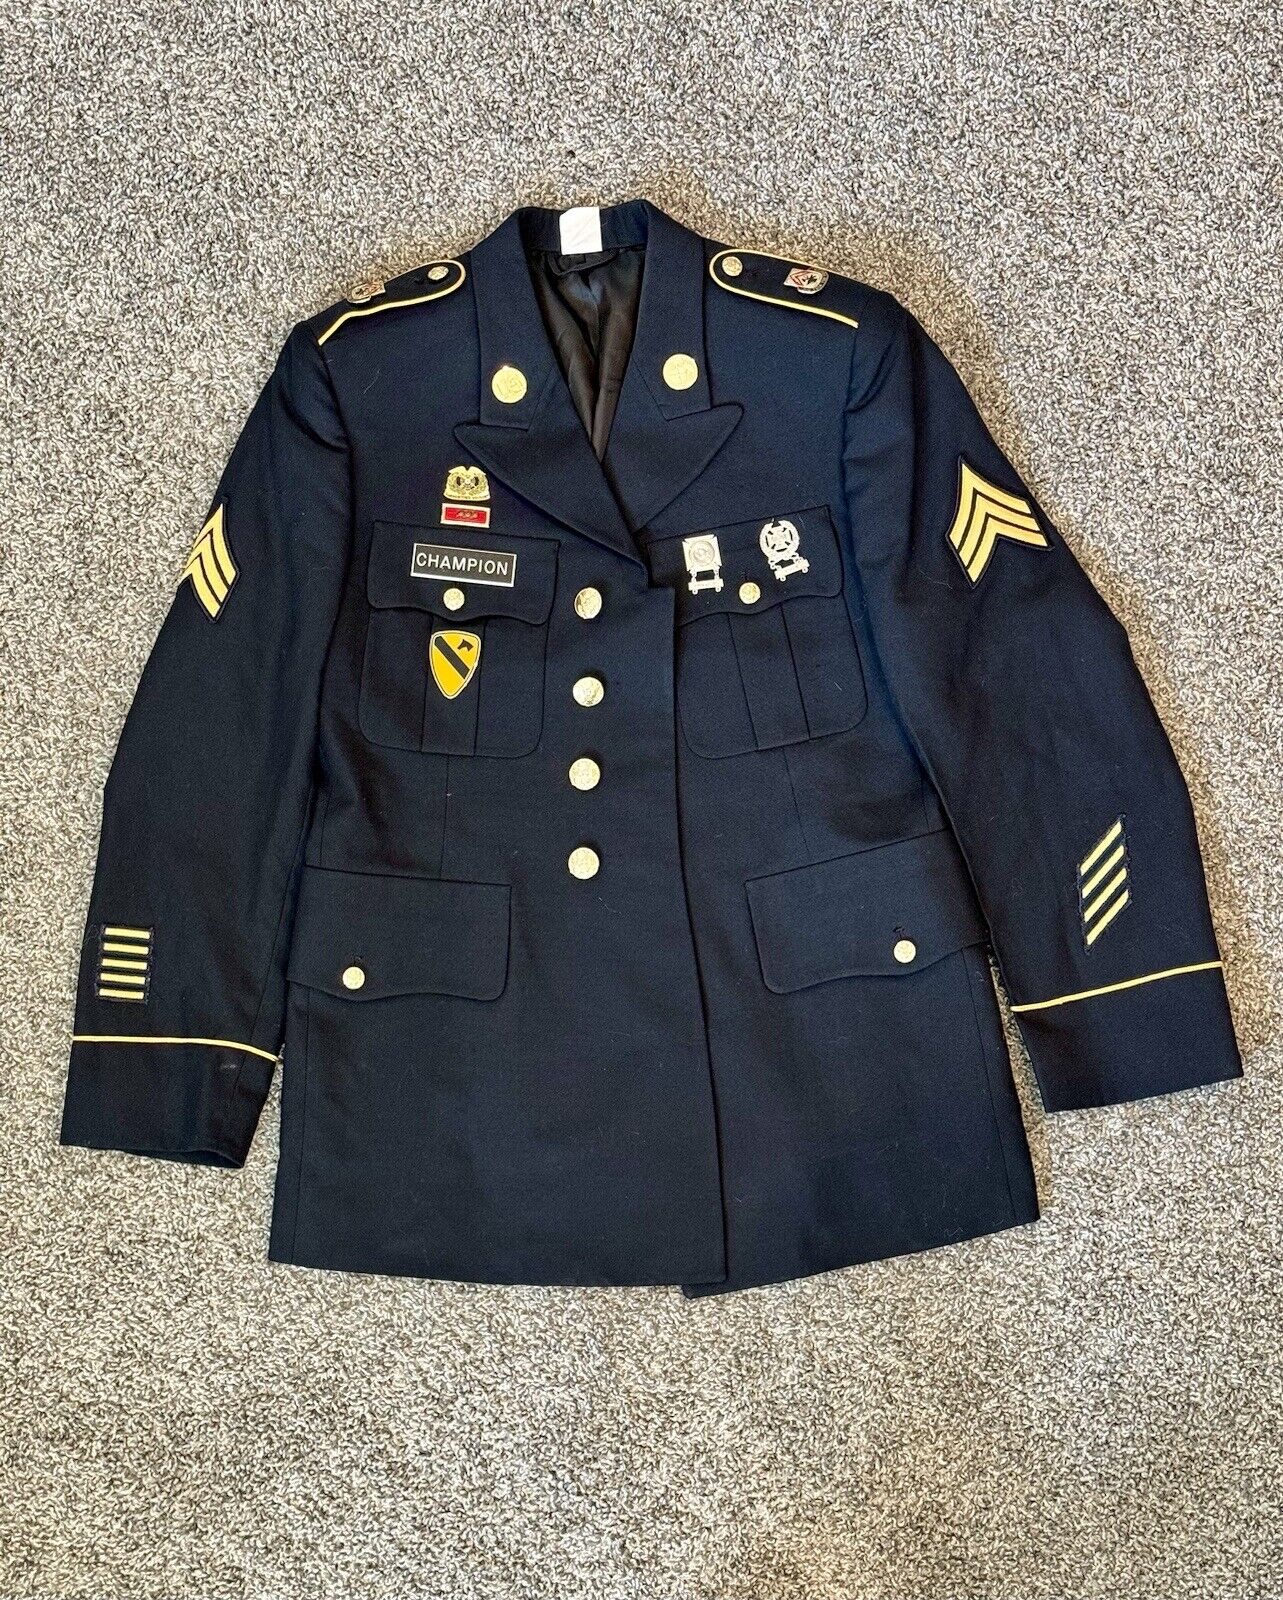 Vintage US Army Bremen-Bowdon Dress Blue Service Uniform Jacket Coat Size 38S